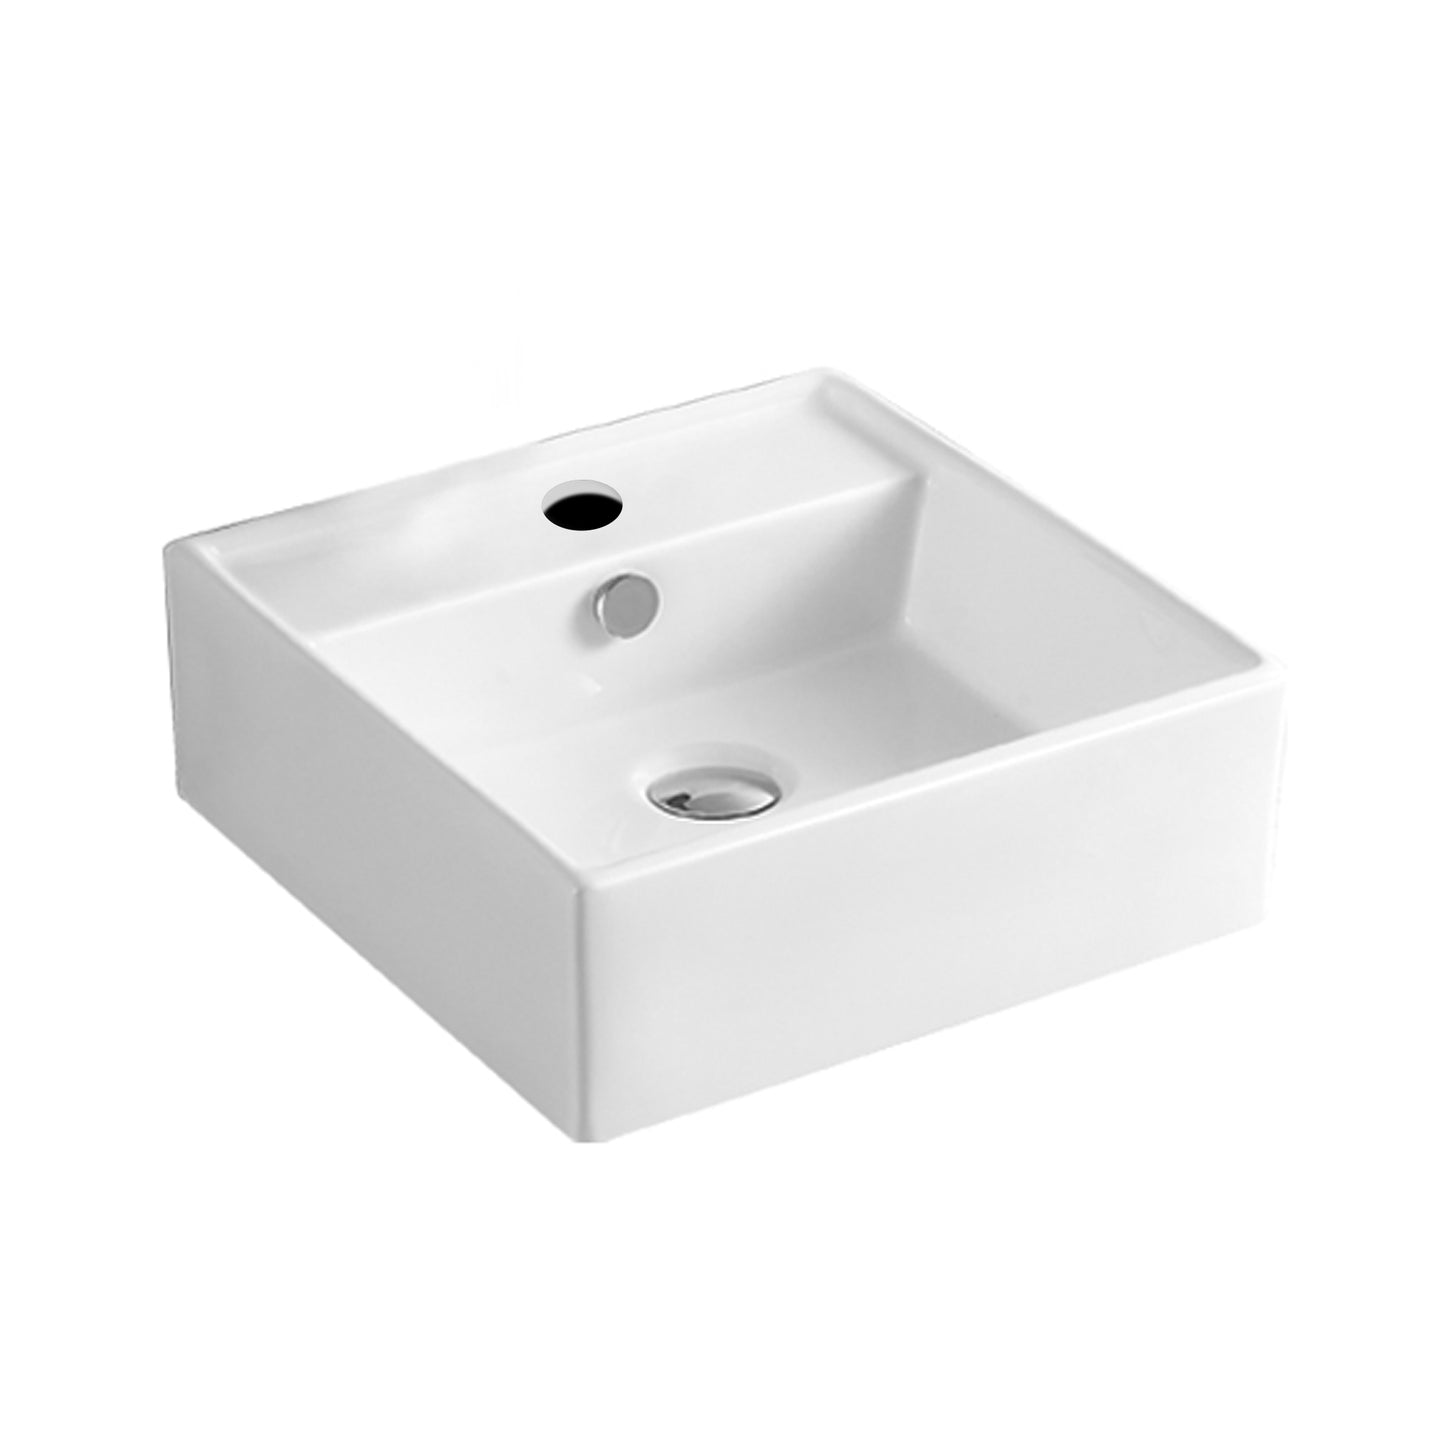 51cm x 43cm Ceramic Basin Bathroom Wash Counter Top Hand Wash Bowl Sink Vanity Above Basins